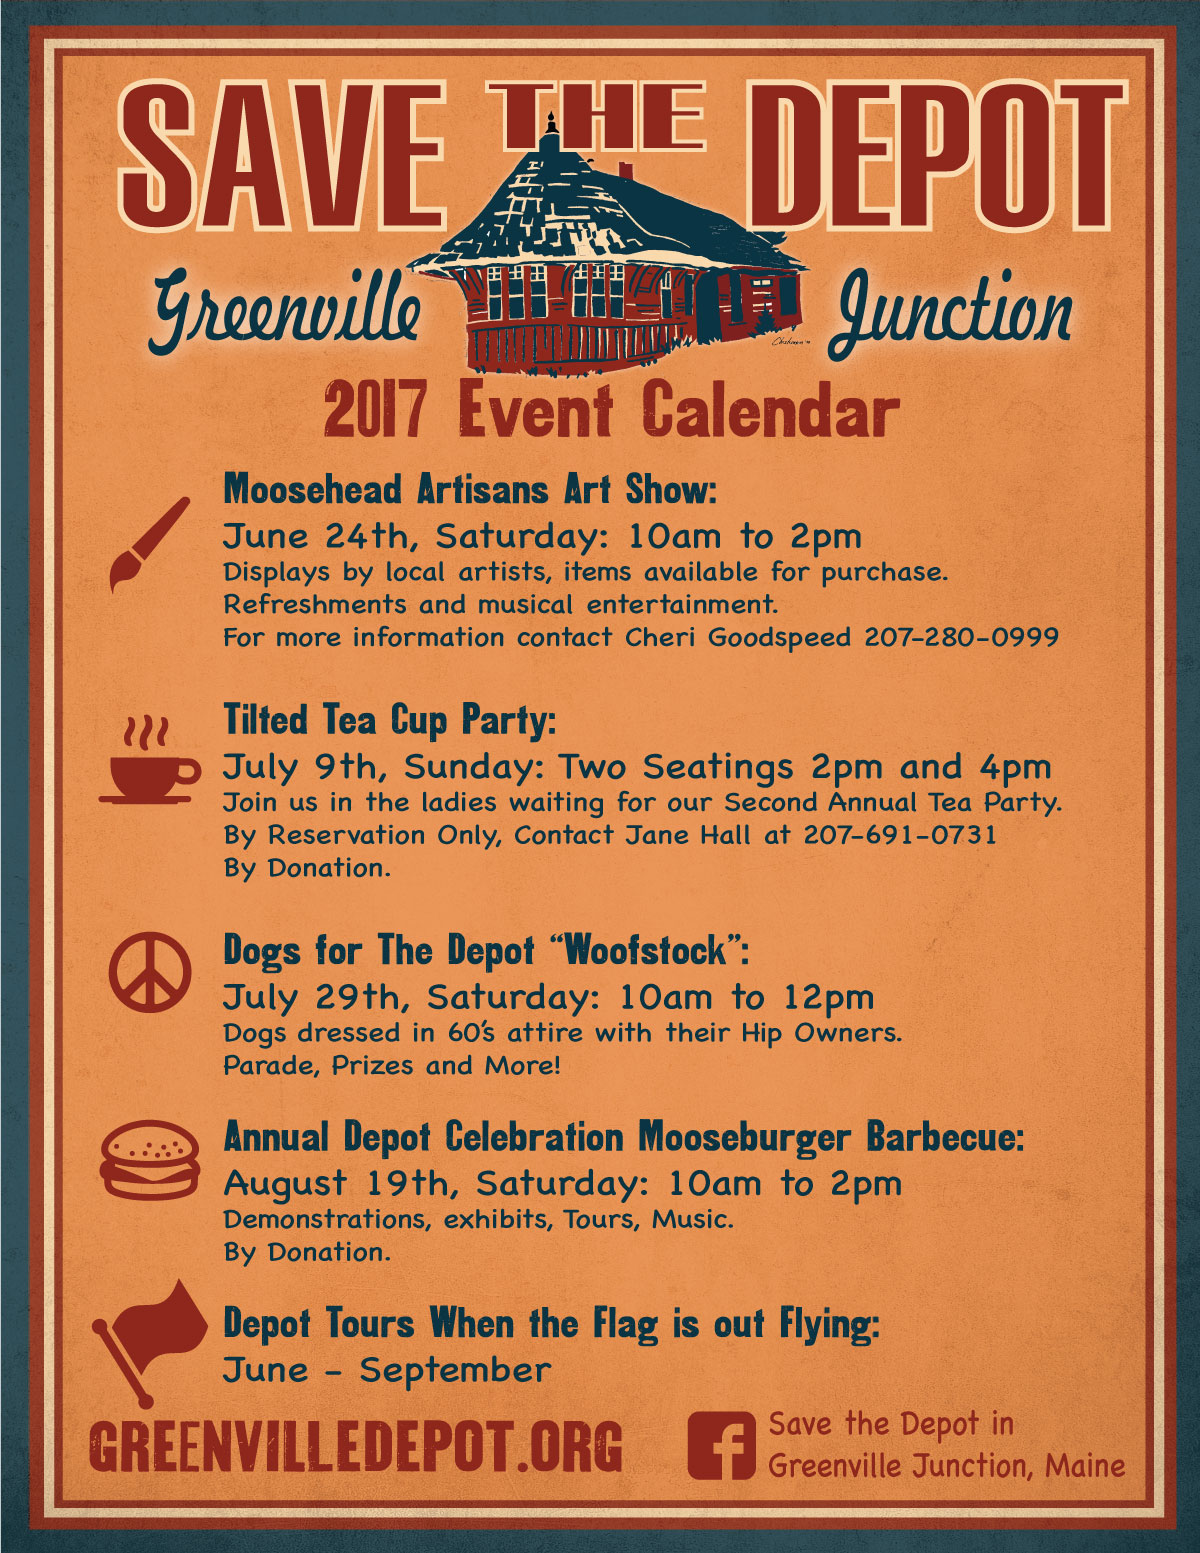 Save the Depot 2017 Event Calendar